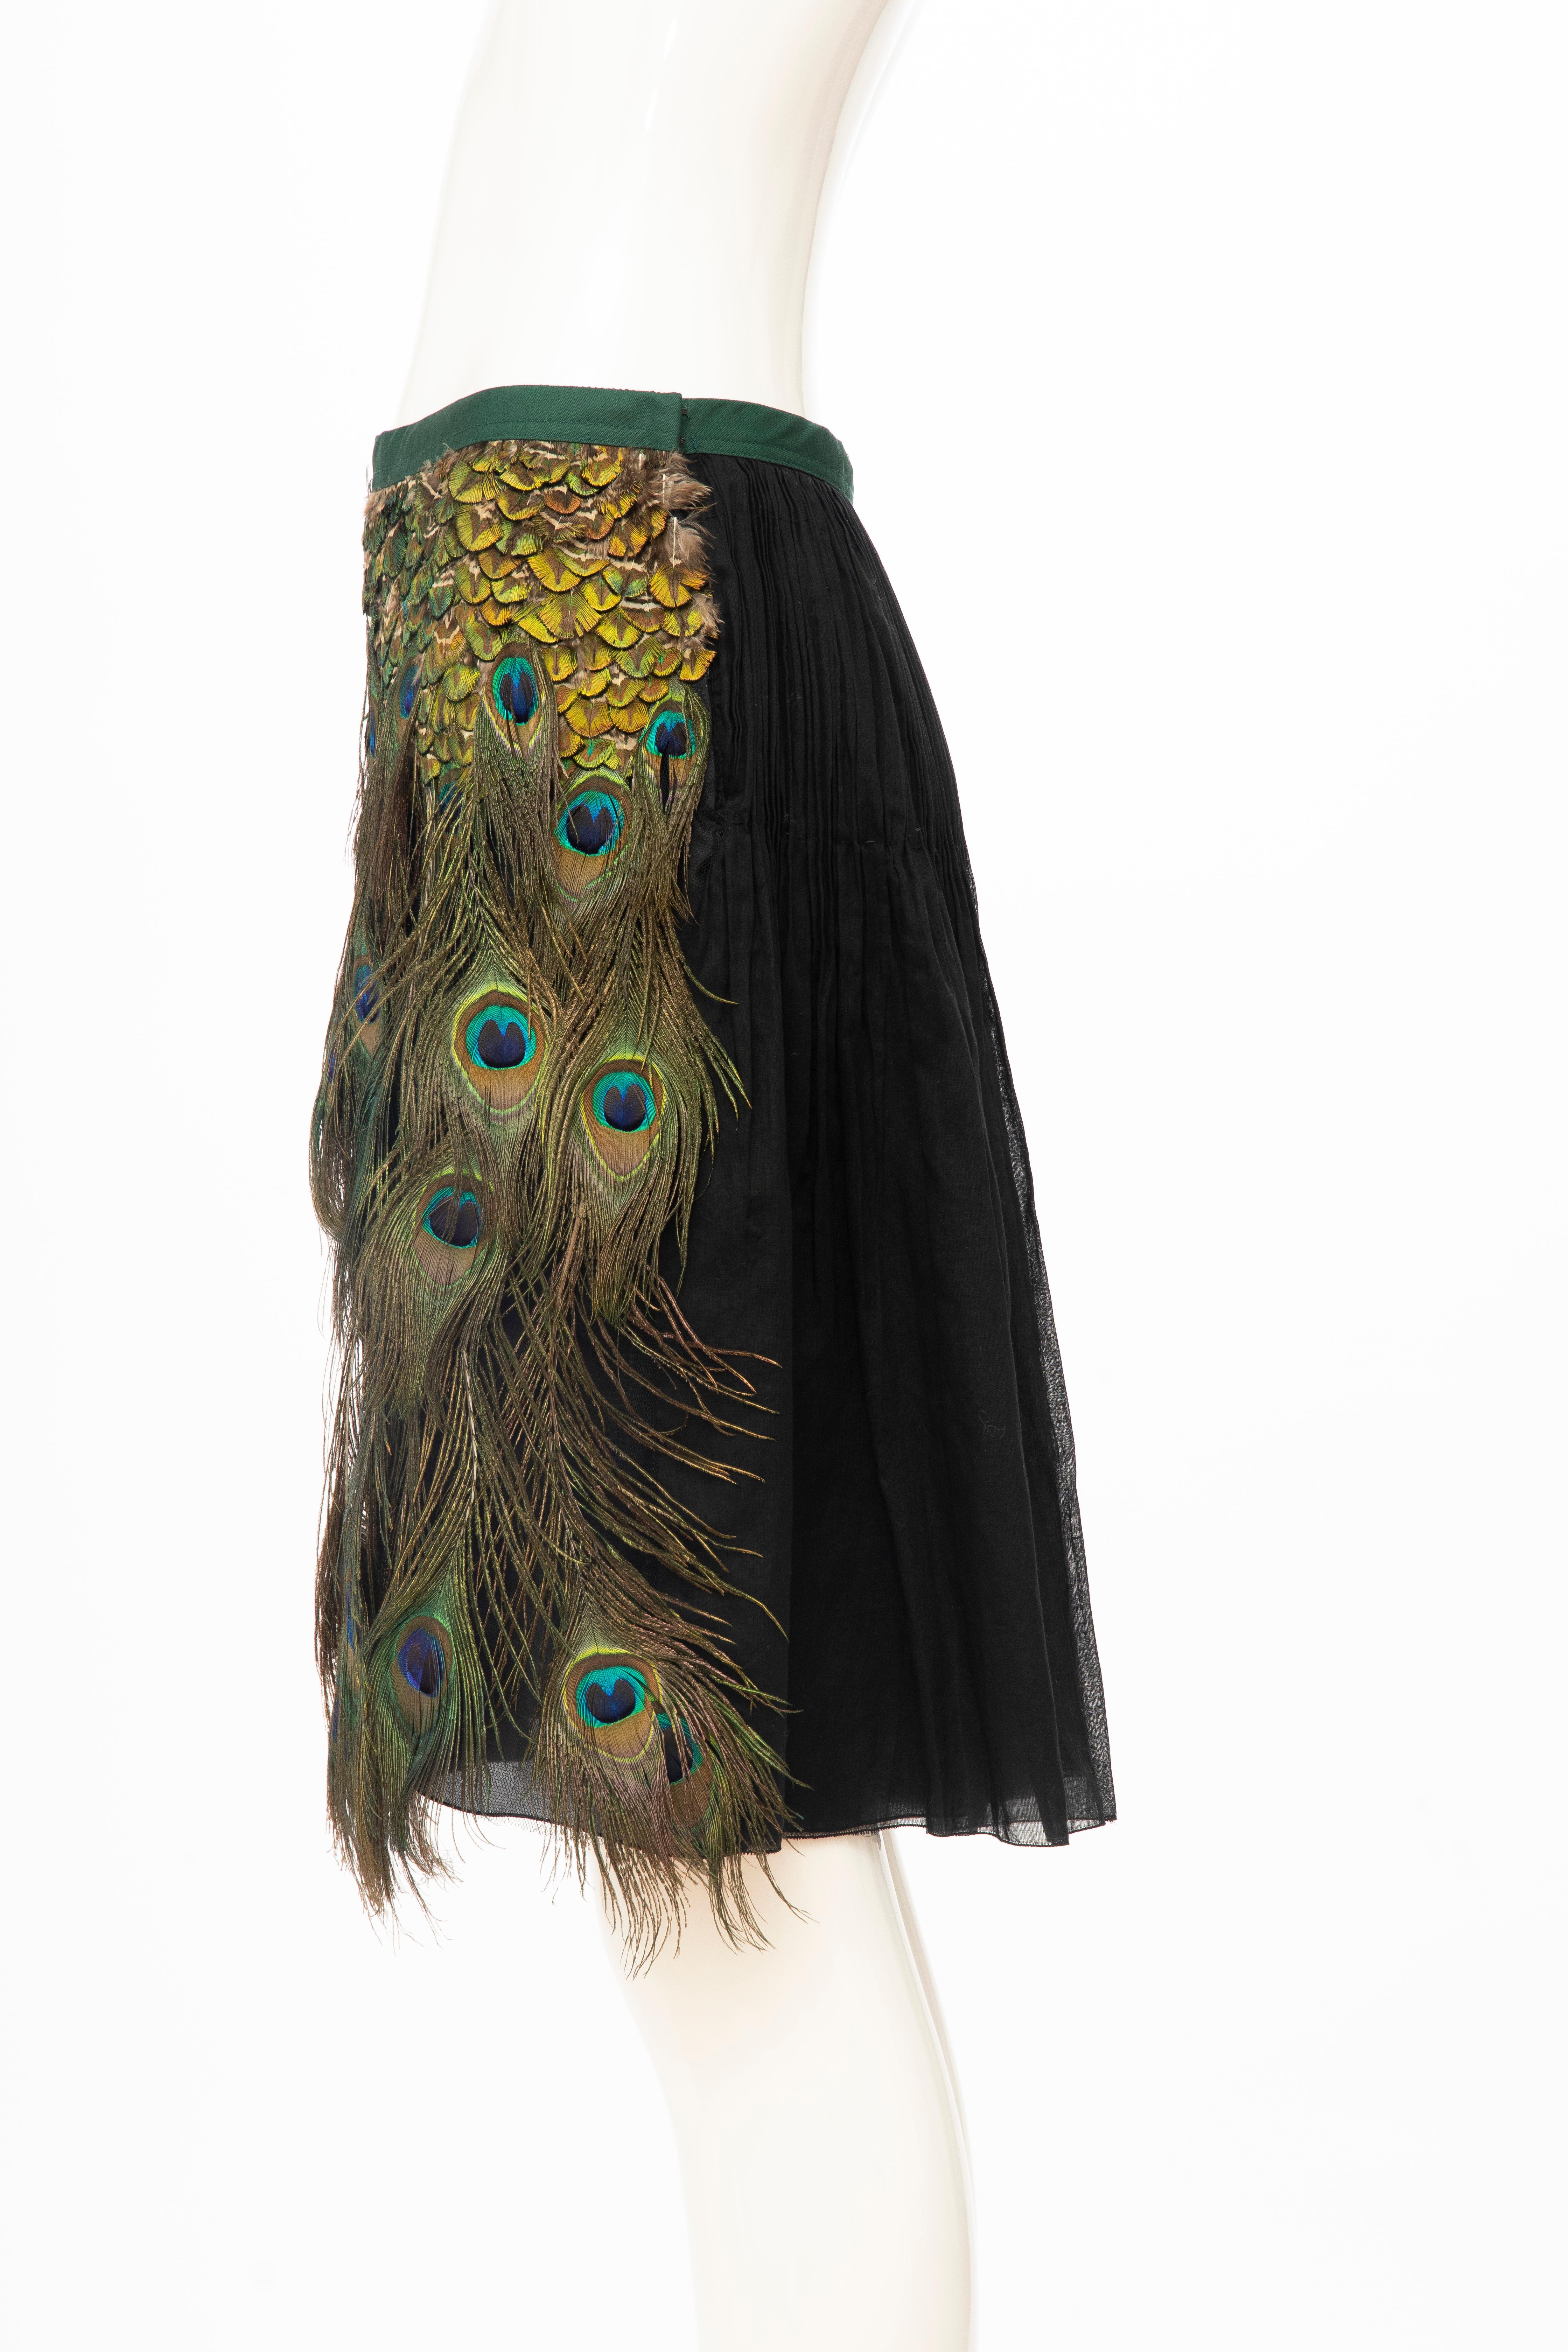 Prada Runway Black Cotton Pleated Skirt Appliquéd Peacock Feathers, Spring 2005 For Sale 3